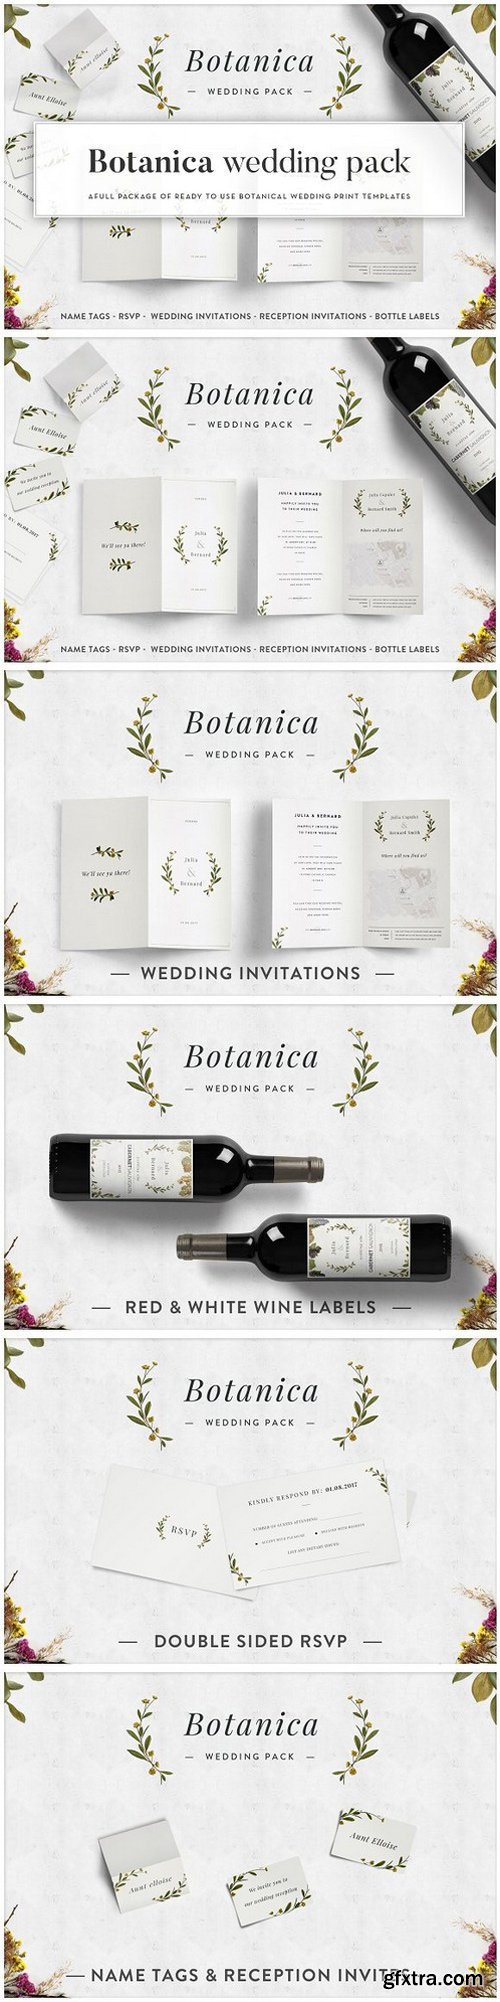 CM - Botanica - Wedding Pack [print] 1452584